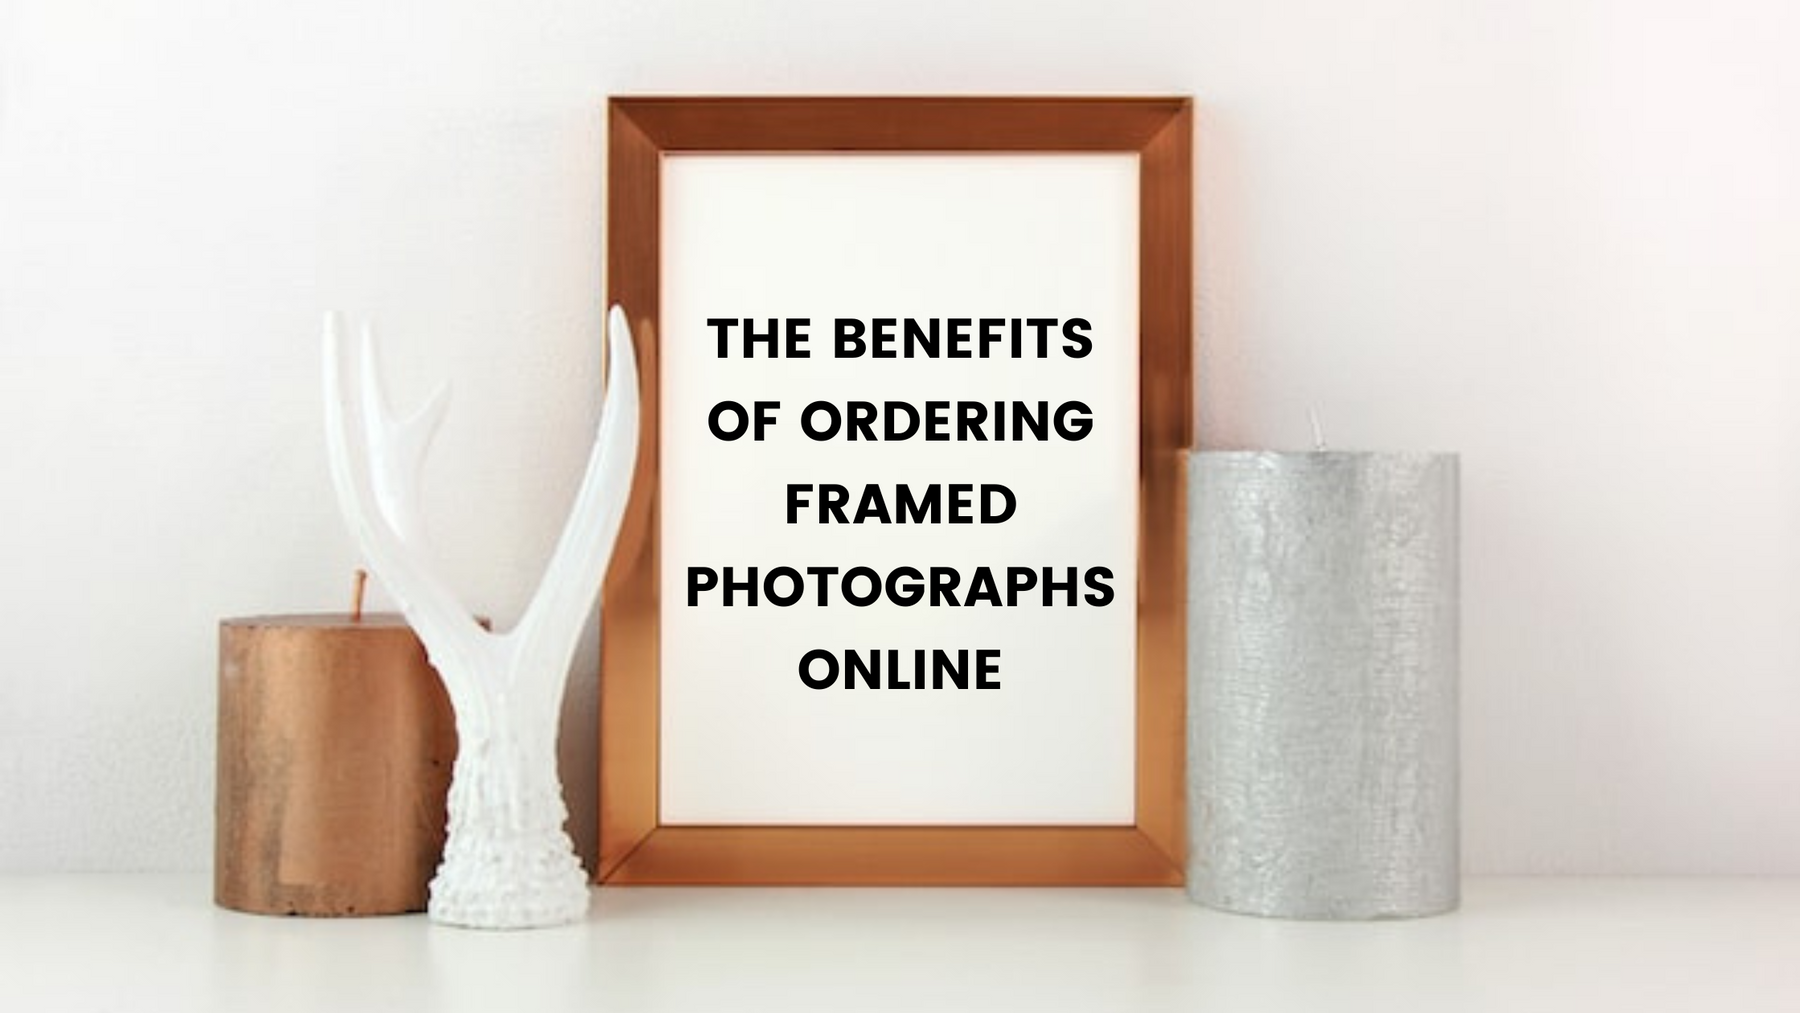 The Benefits of Ordering Framed Photographs Online